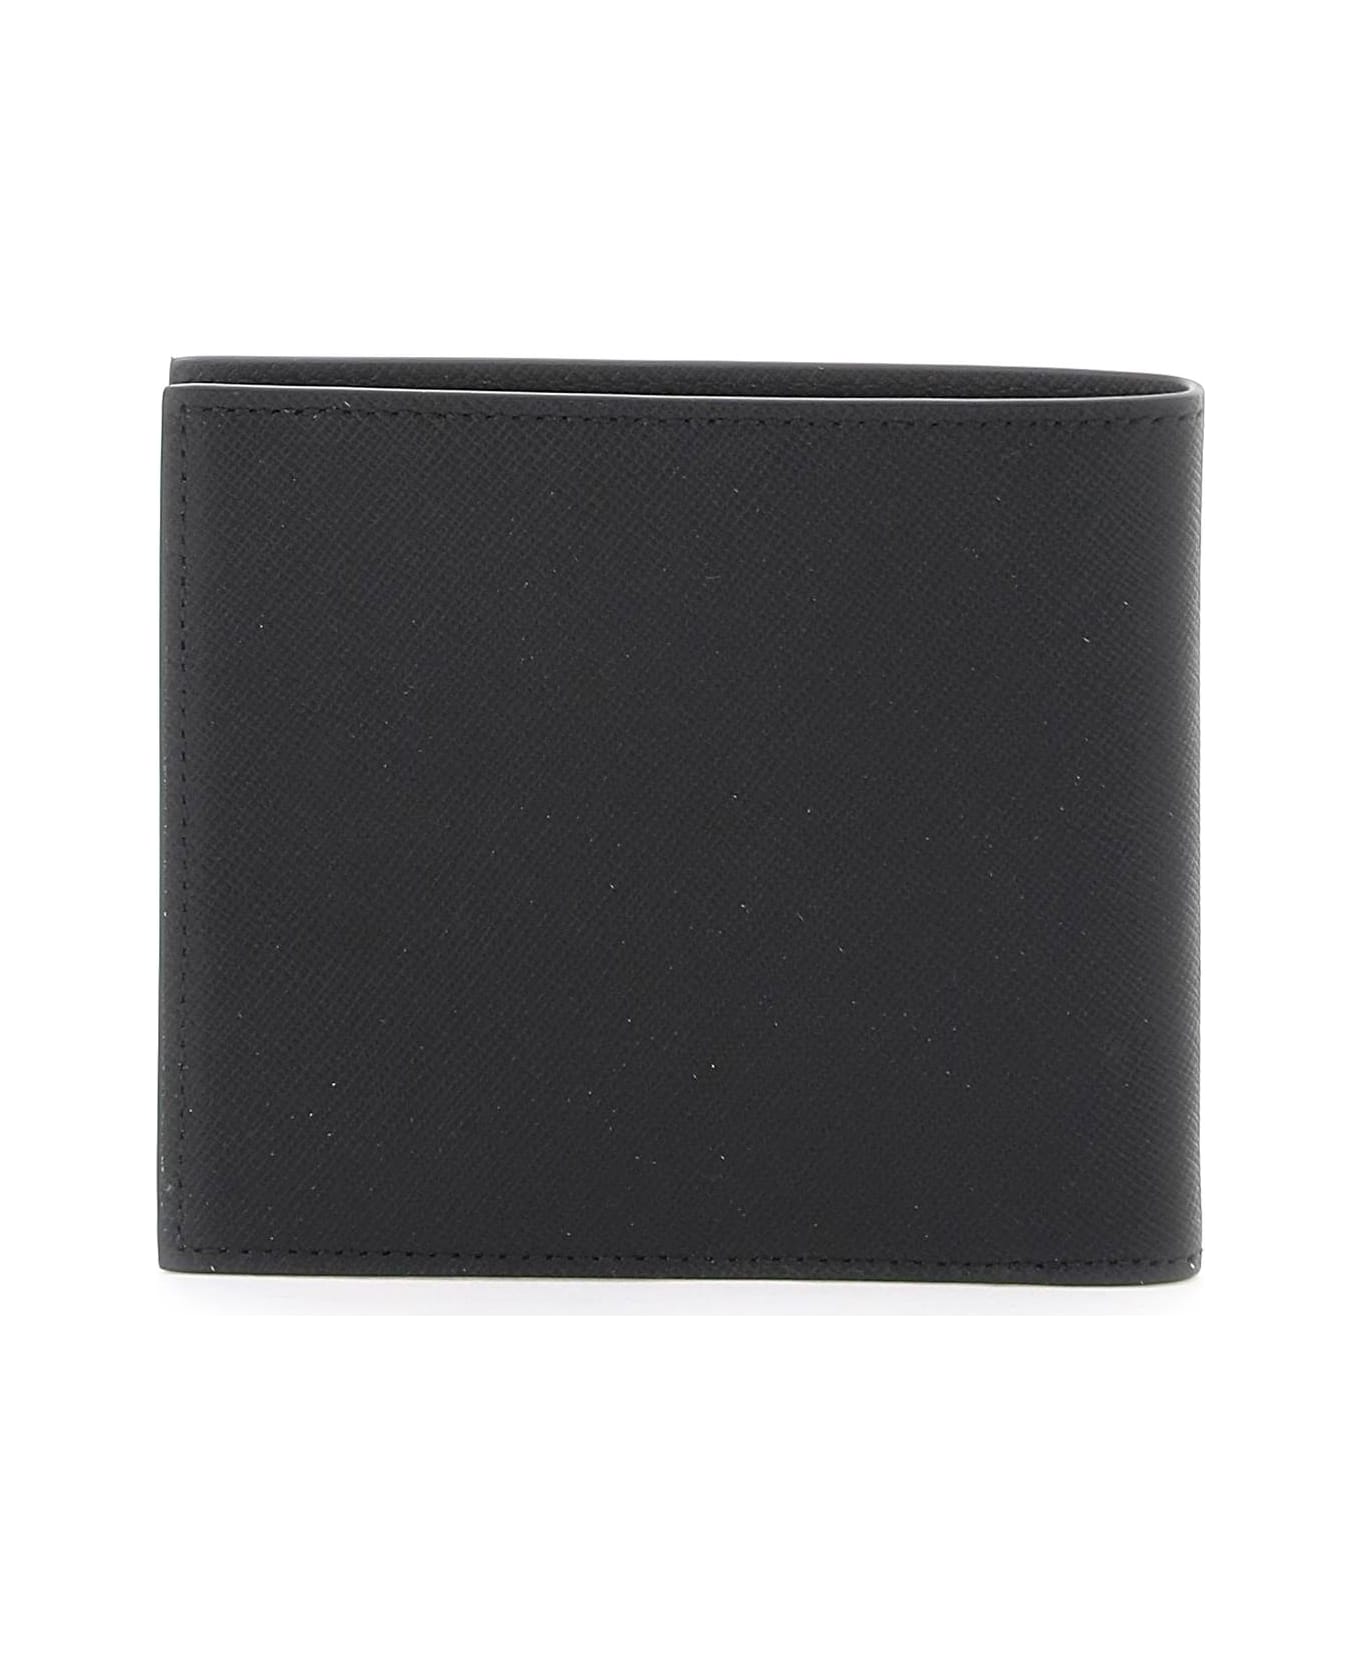 Paul Smith Mini Blur Wallet - Black